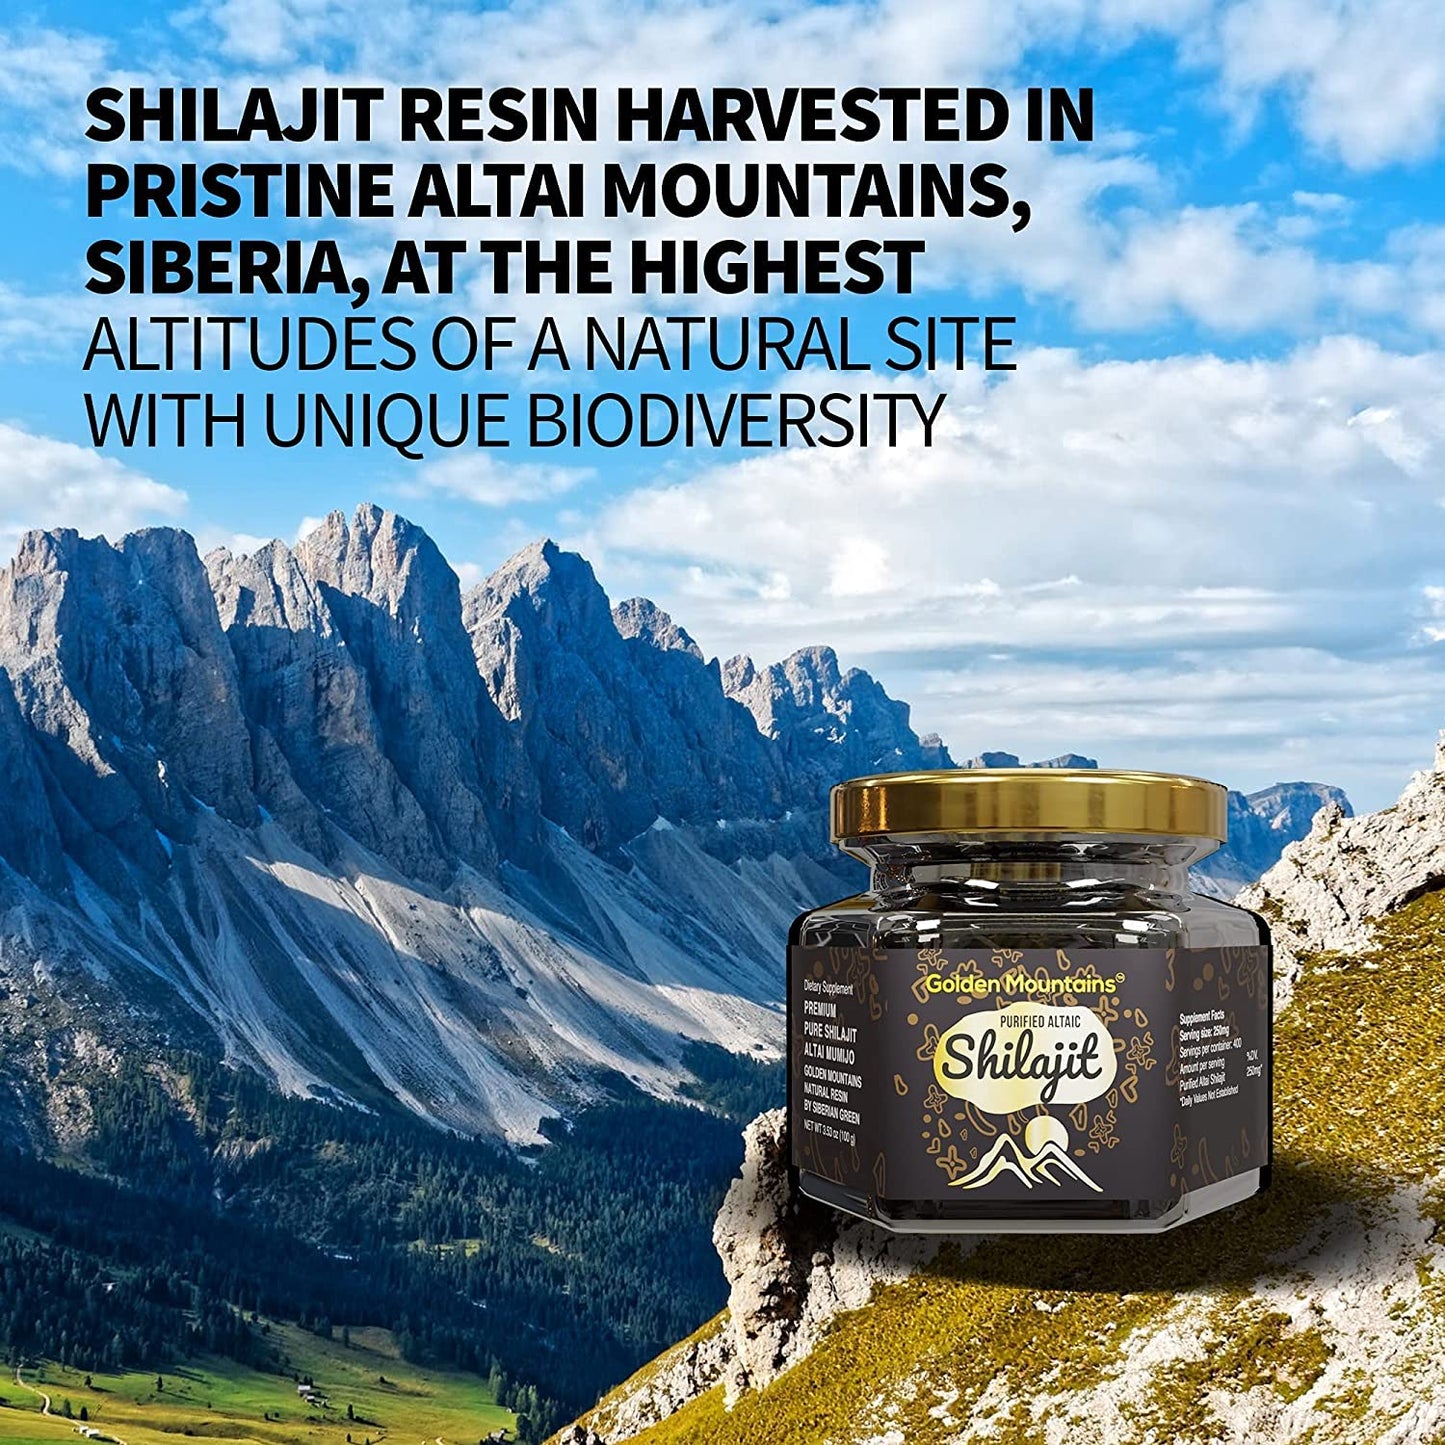 Premium Golden Mountains Shilajit Resin 100g (3.53 oz) with Measuring Spoon